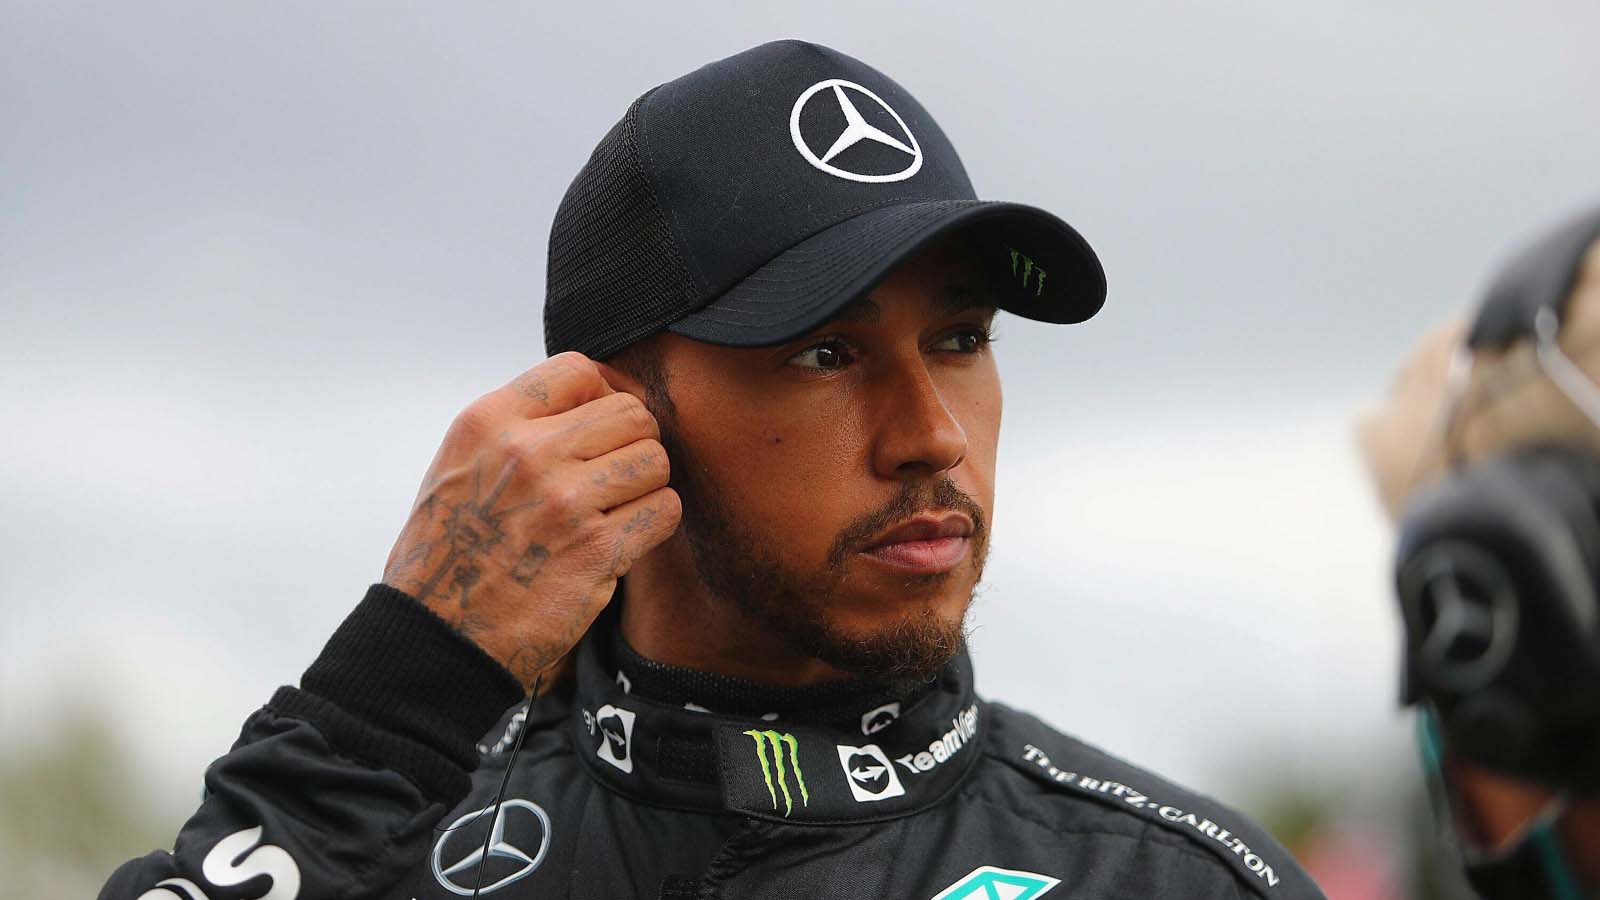 Lewis Hamilton puts in his earpiece. Imola April 2022.